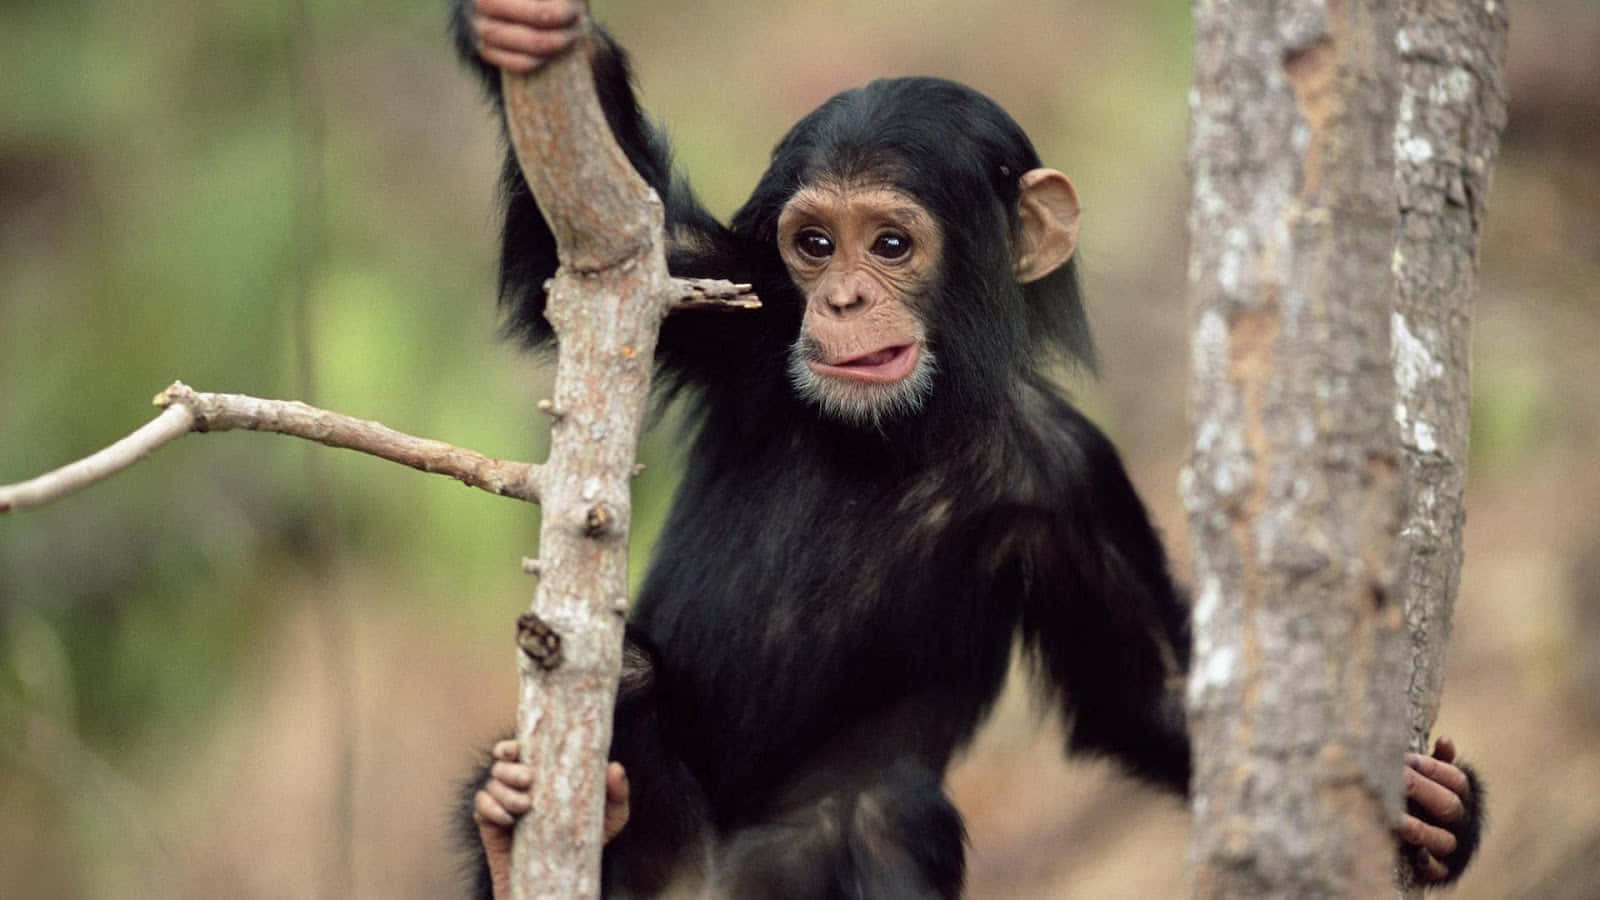 Cute Monkey Photo Hanging On Twig Wallpaper